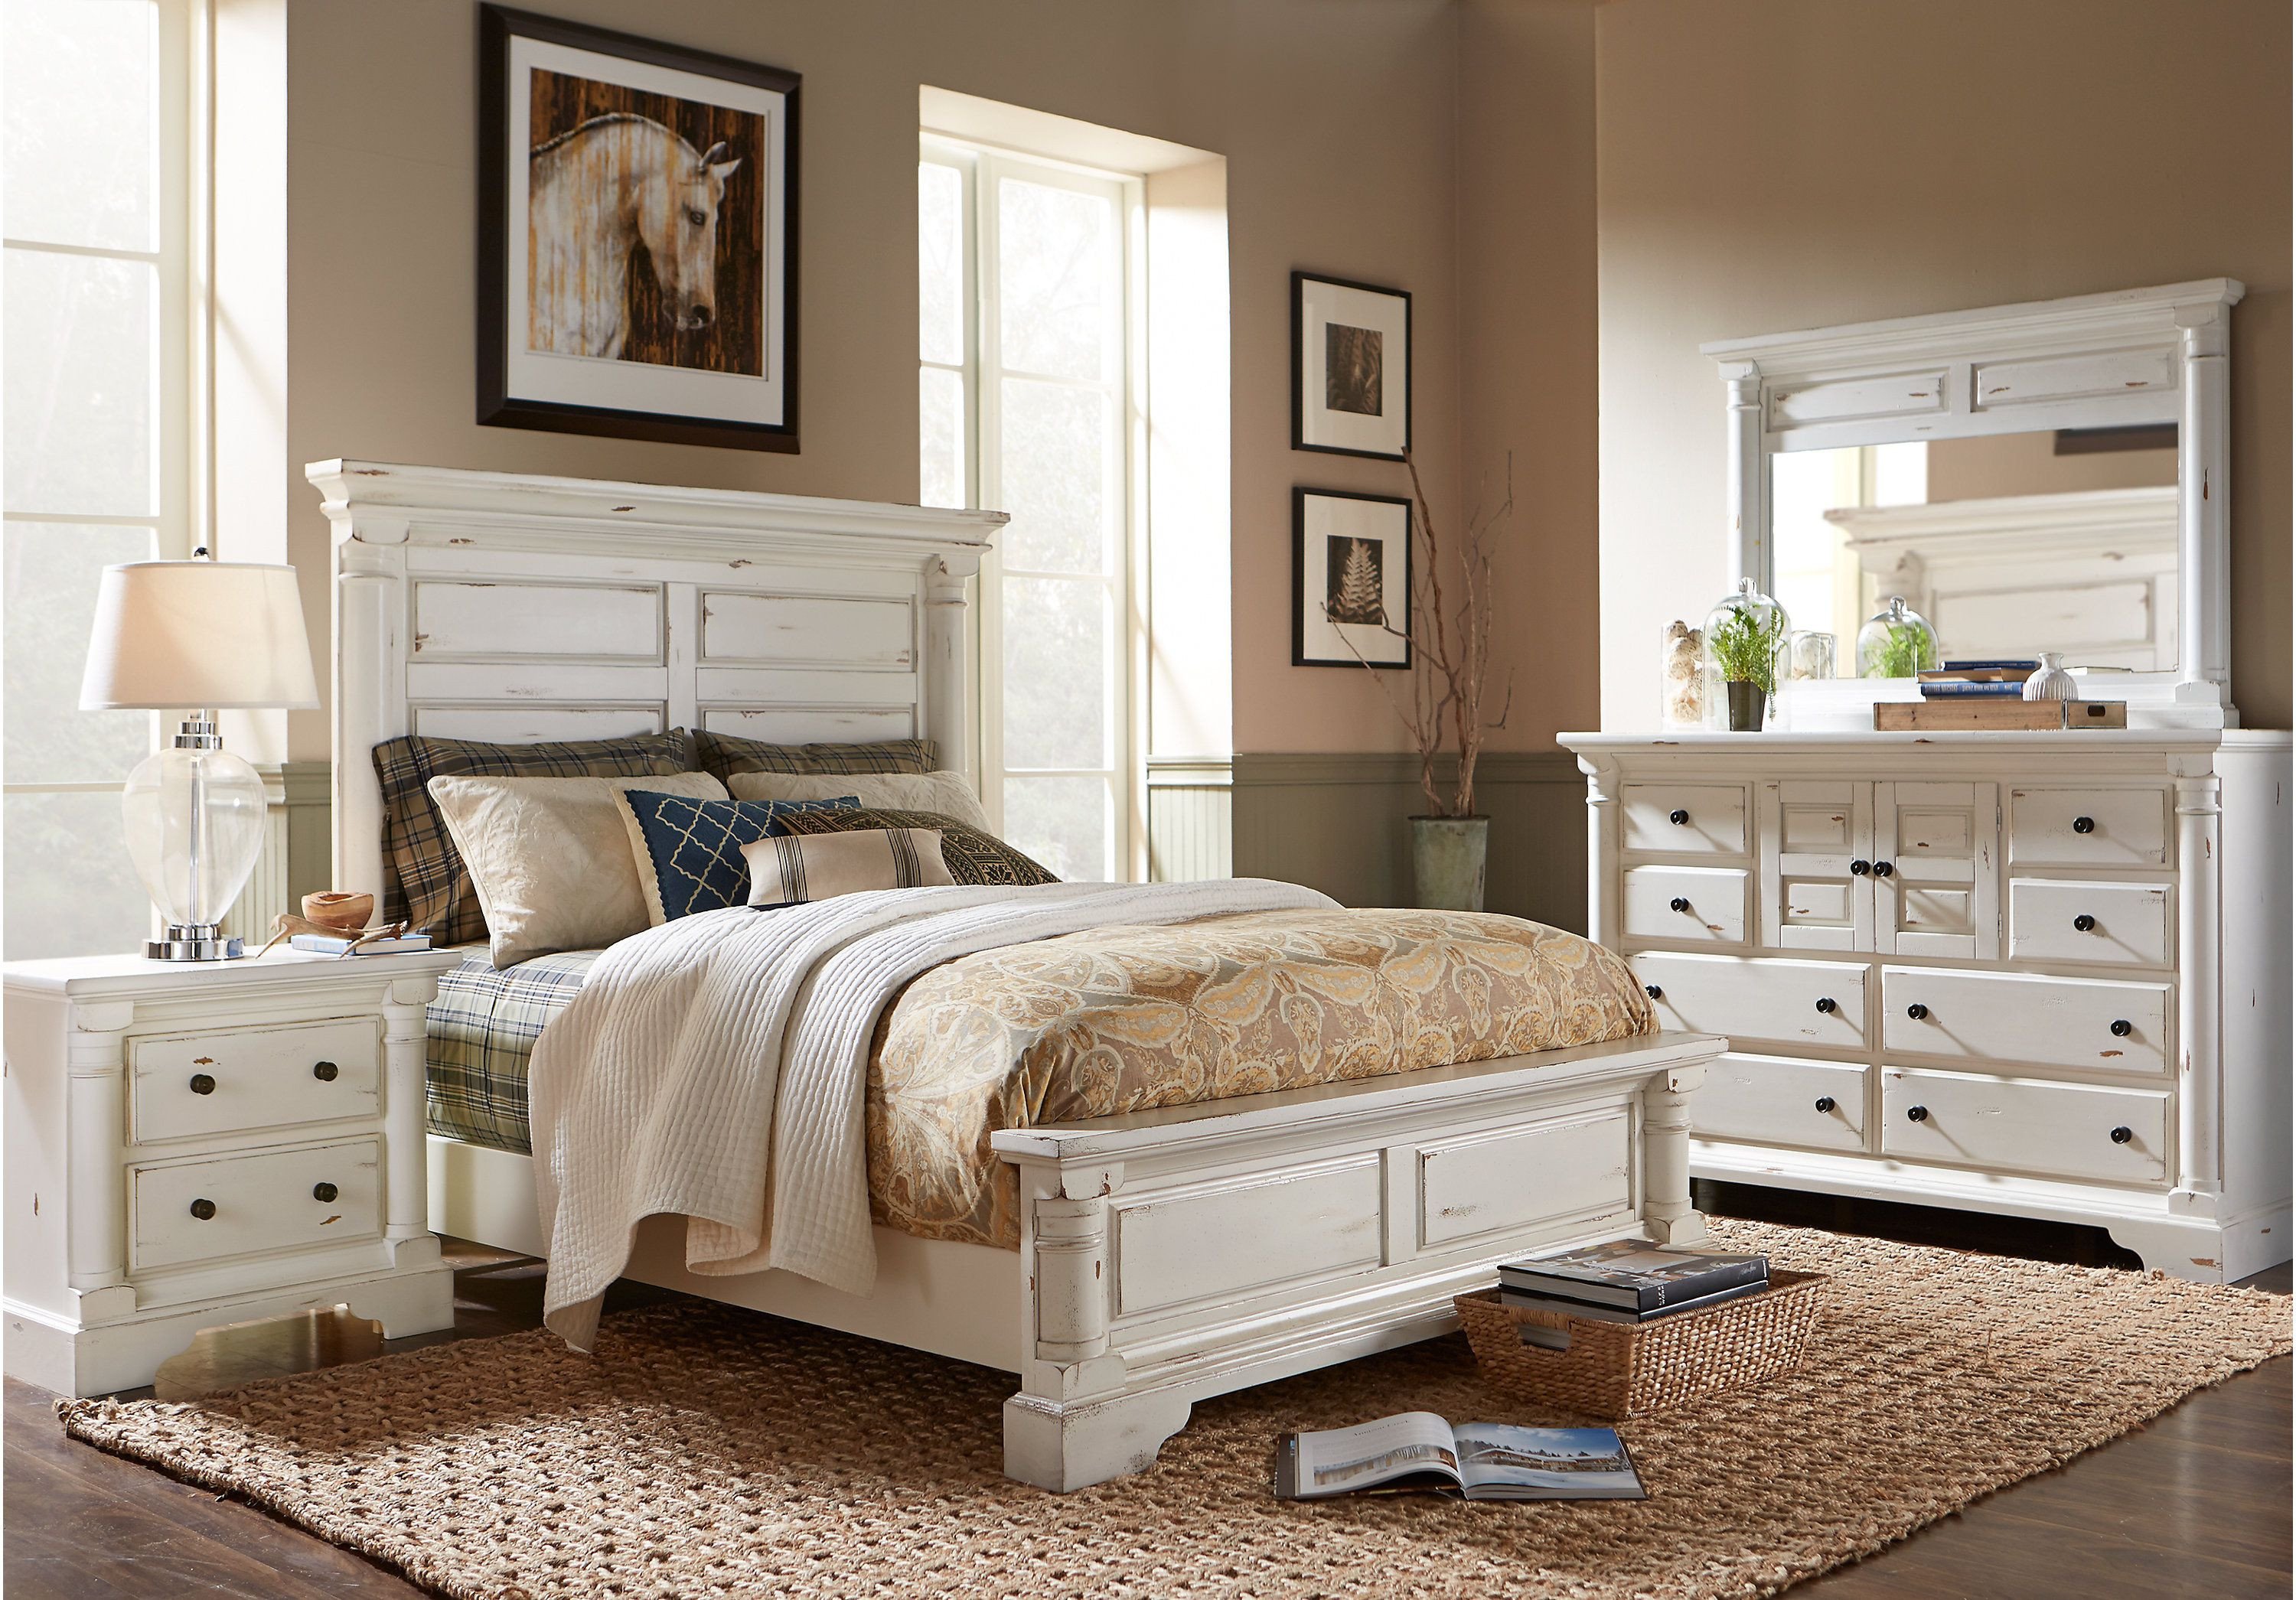 ikea off white bedroom furniture